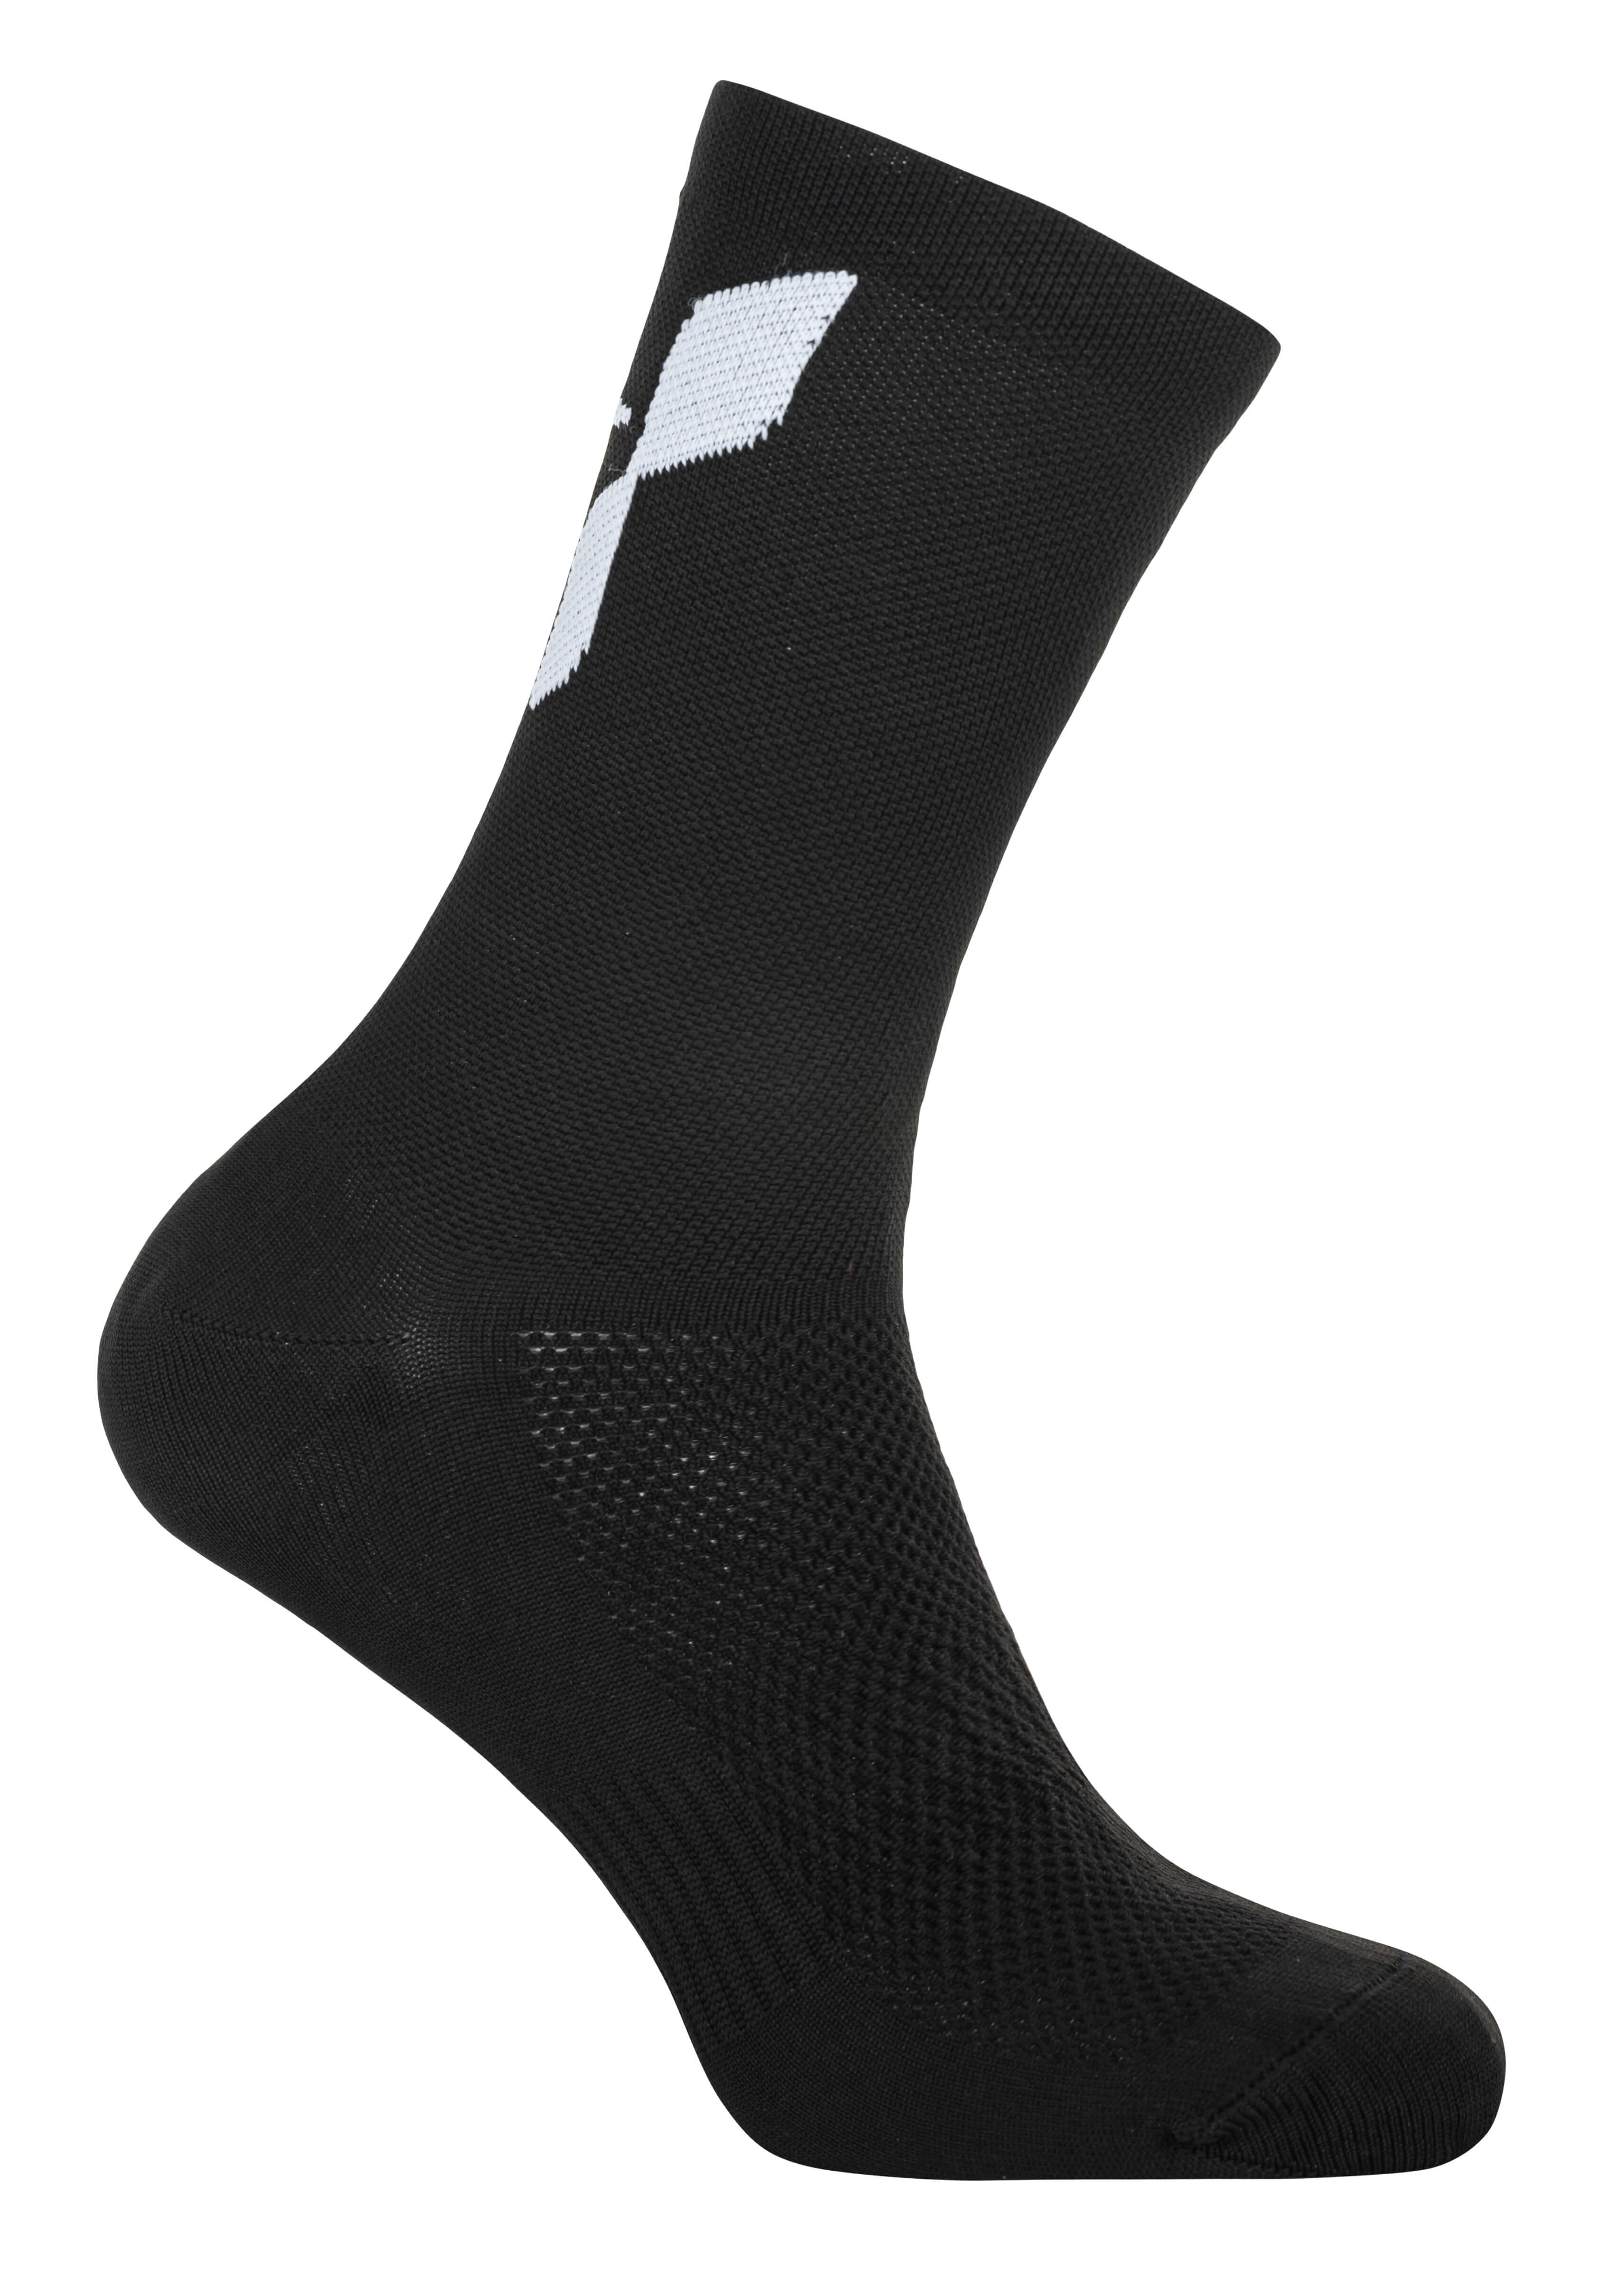 Ponožky PELLS Mask Black/White - 35-38